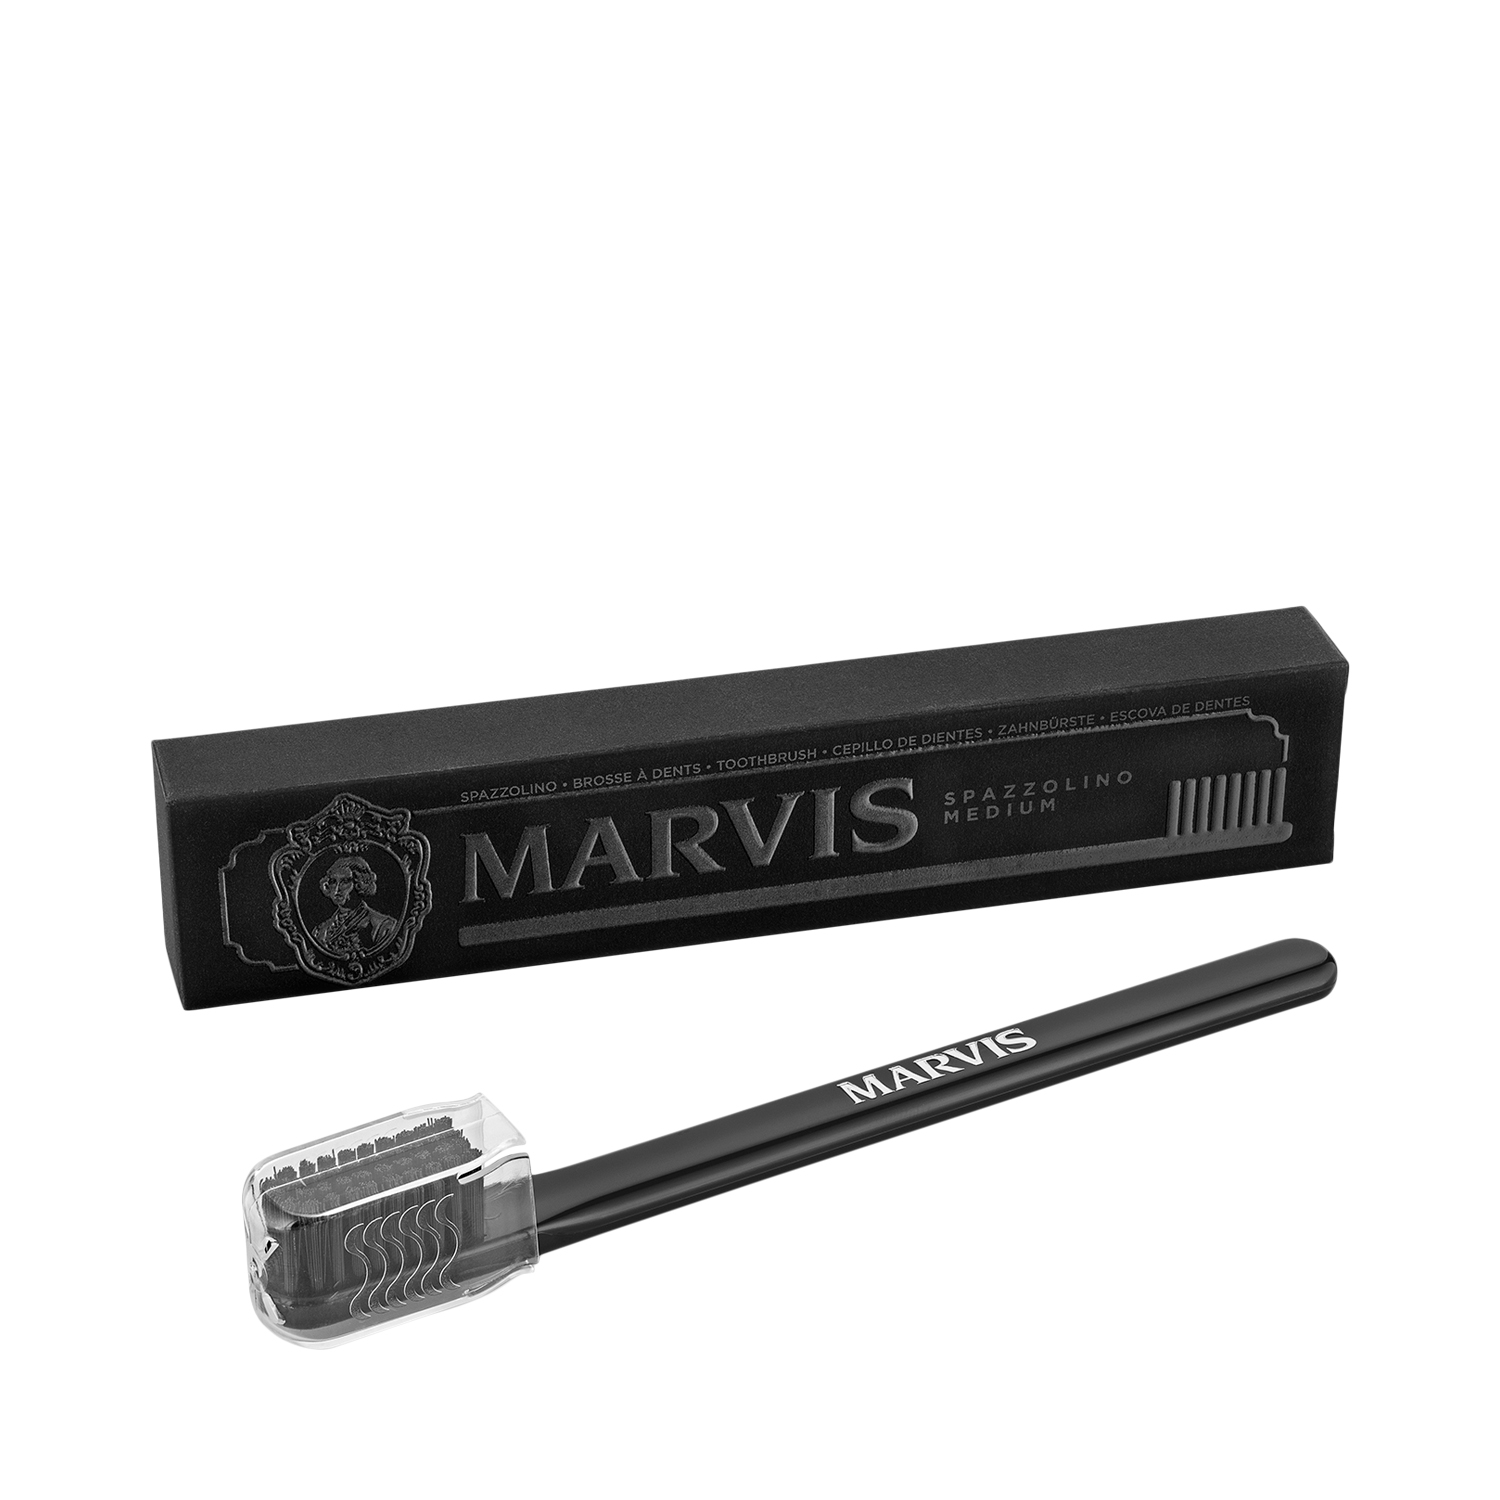 Marvis - Zahnbürste schwarz - medium